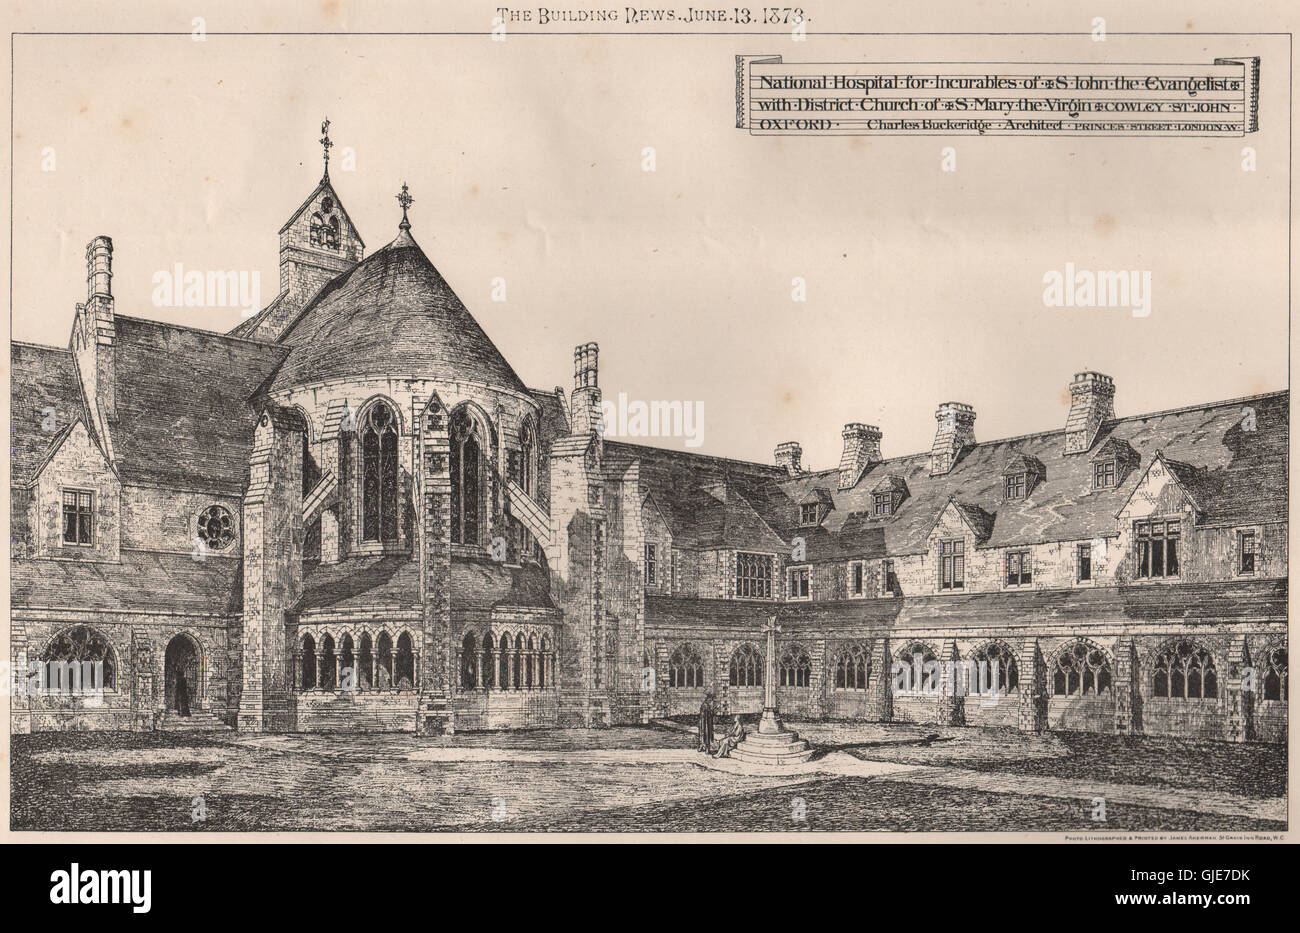 Incurable Hospital St John Evangelist/Mary Virgin Cowley St John Oxford (2) 1873 Stock Photo